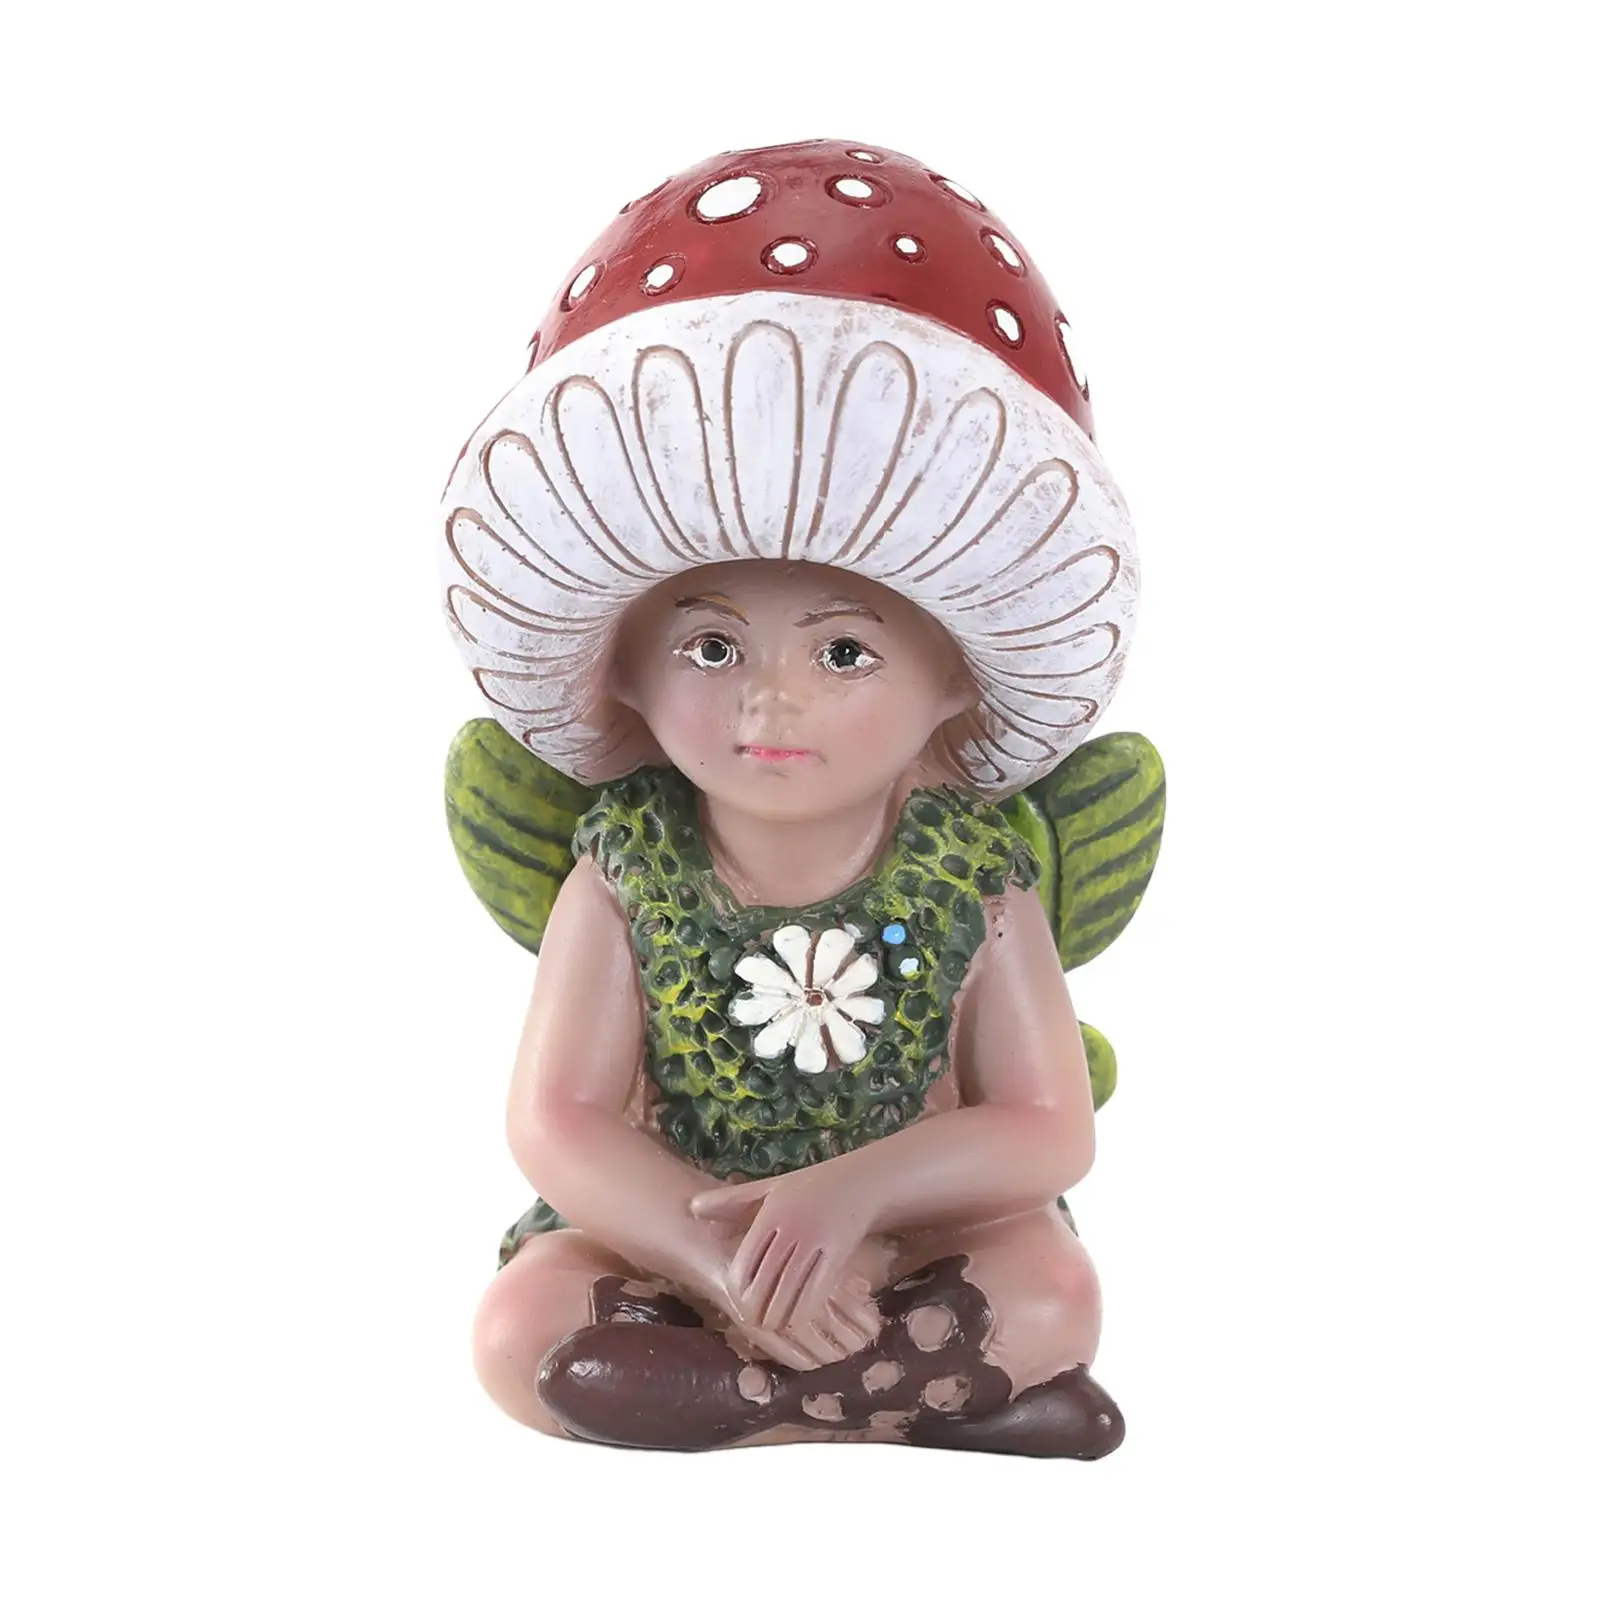 Mushroom Elf Boy Statue Ornament Table Display Decor for Balcony Party